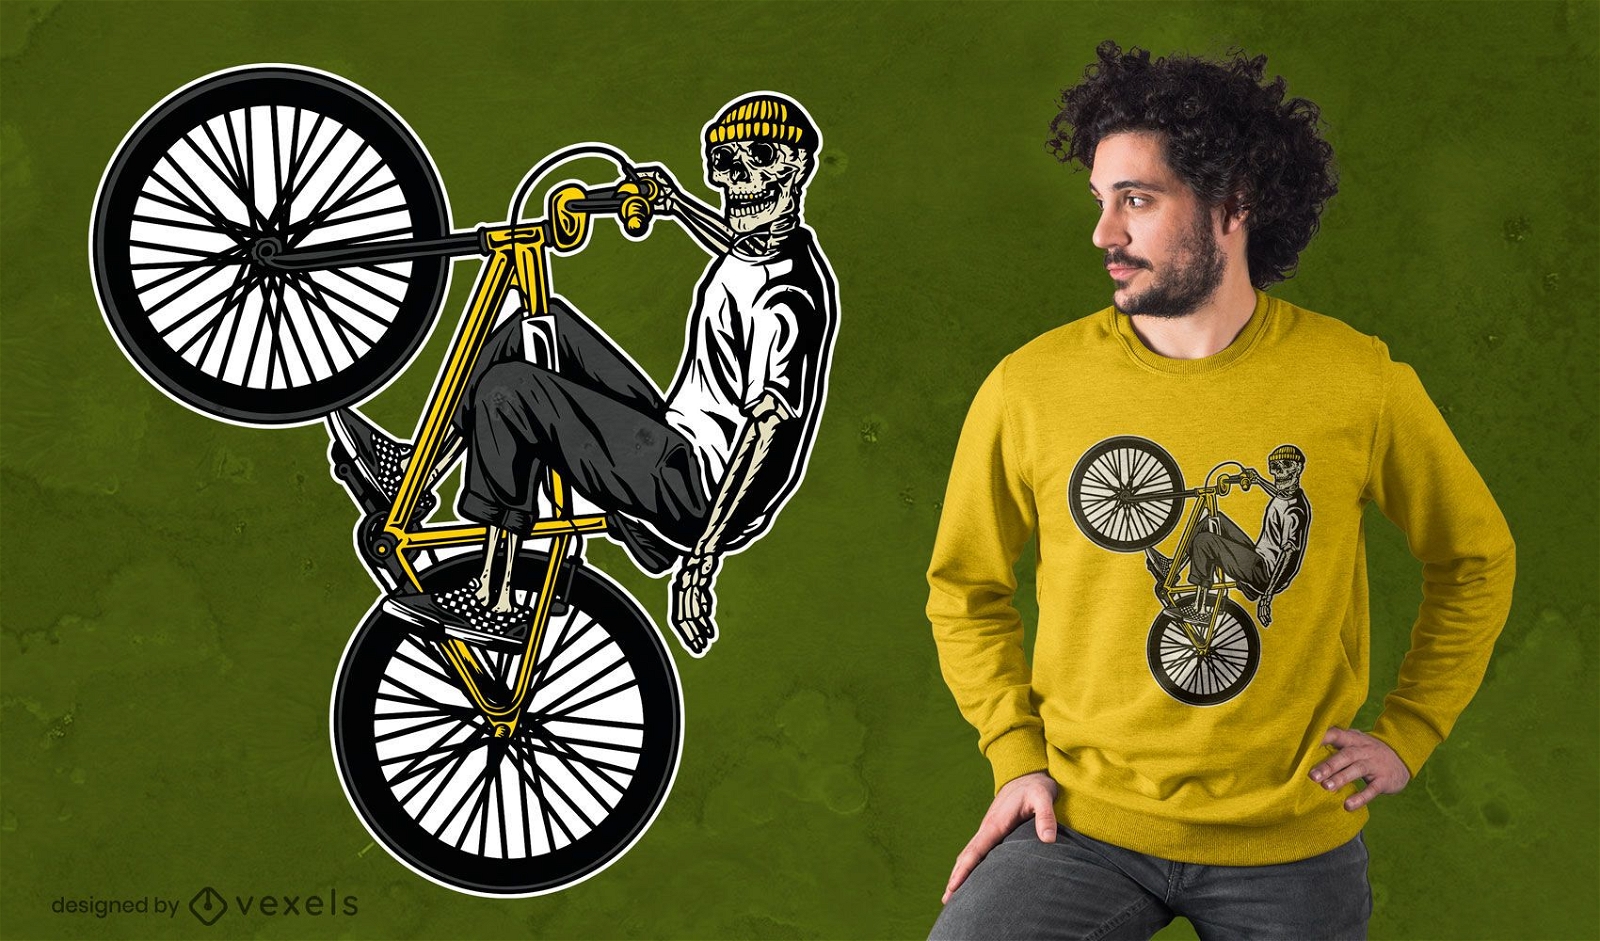 Skeleton BMX bike t-shirt design